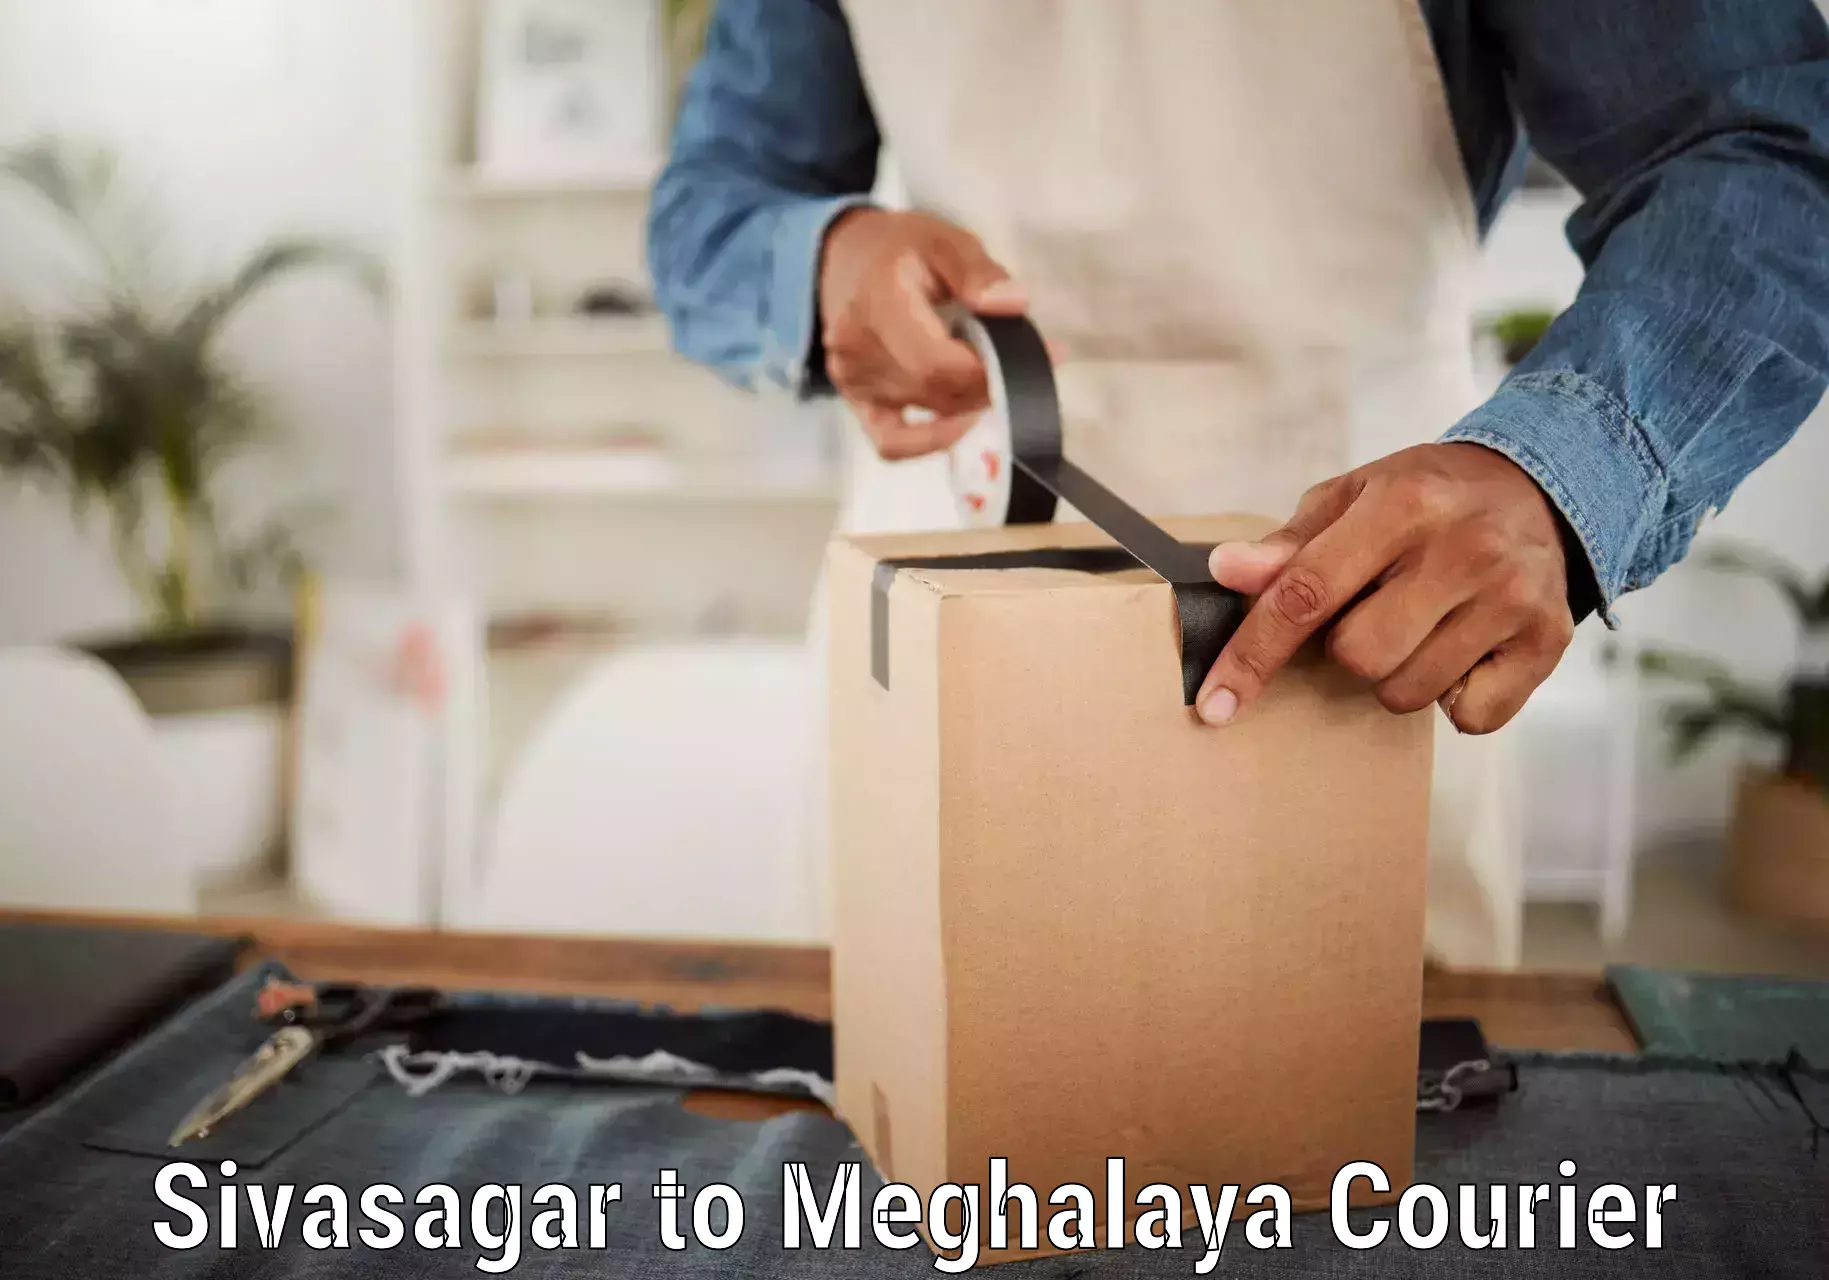 Courier service comparison Sivasagar to Cherrapunji